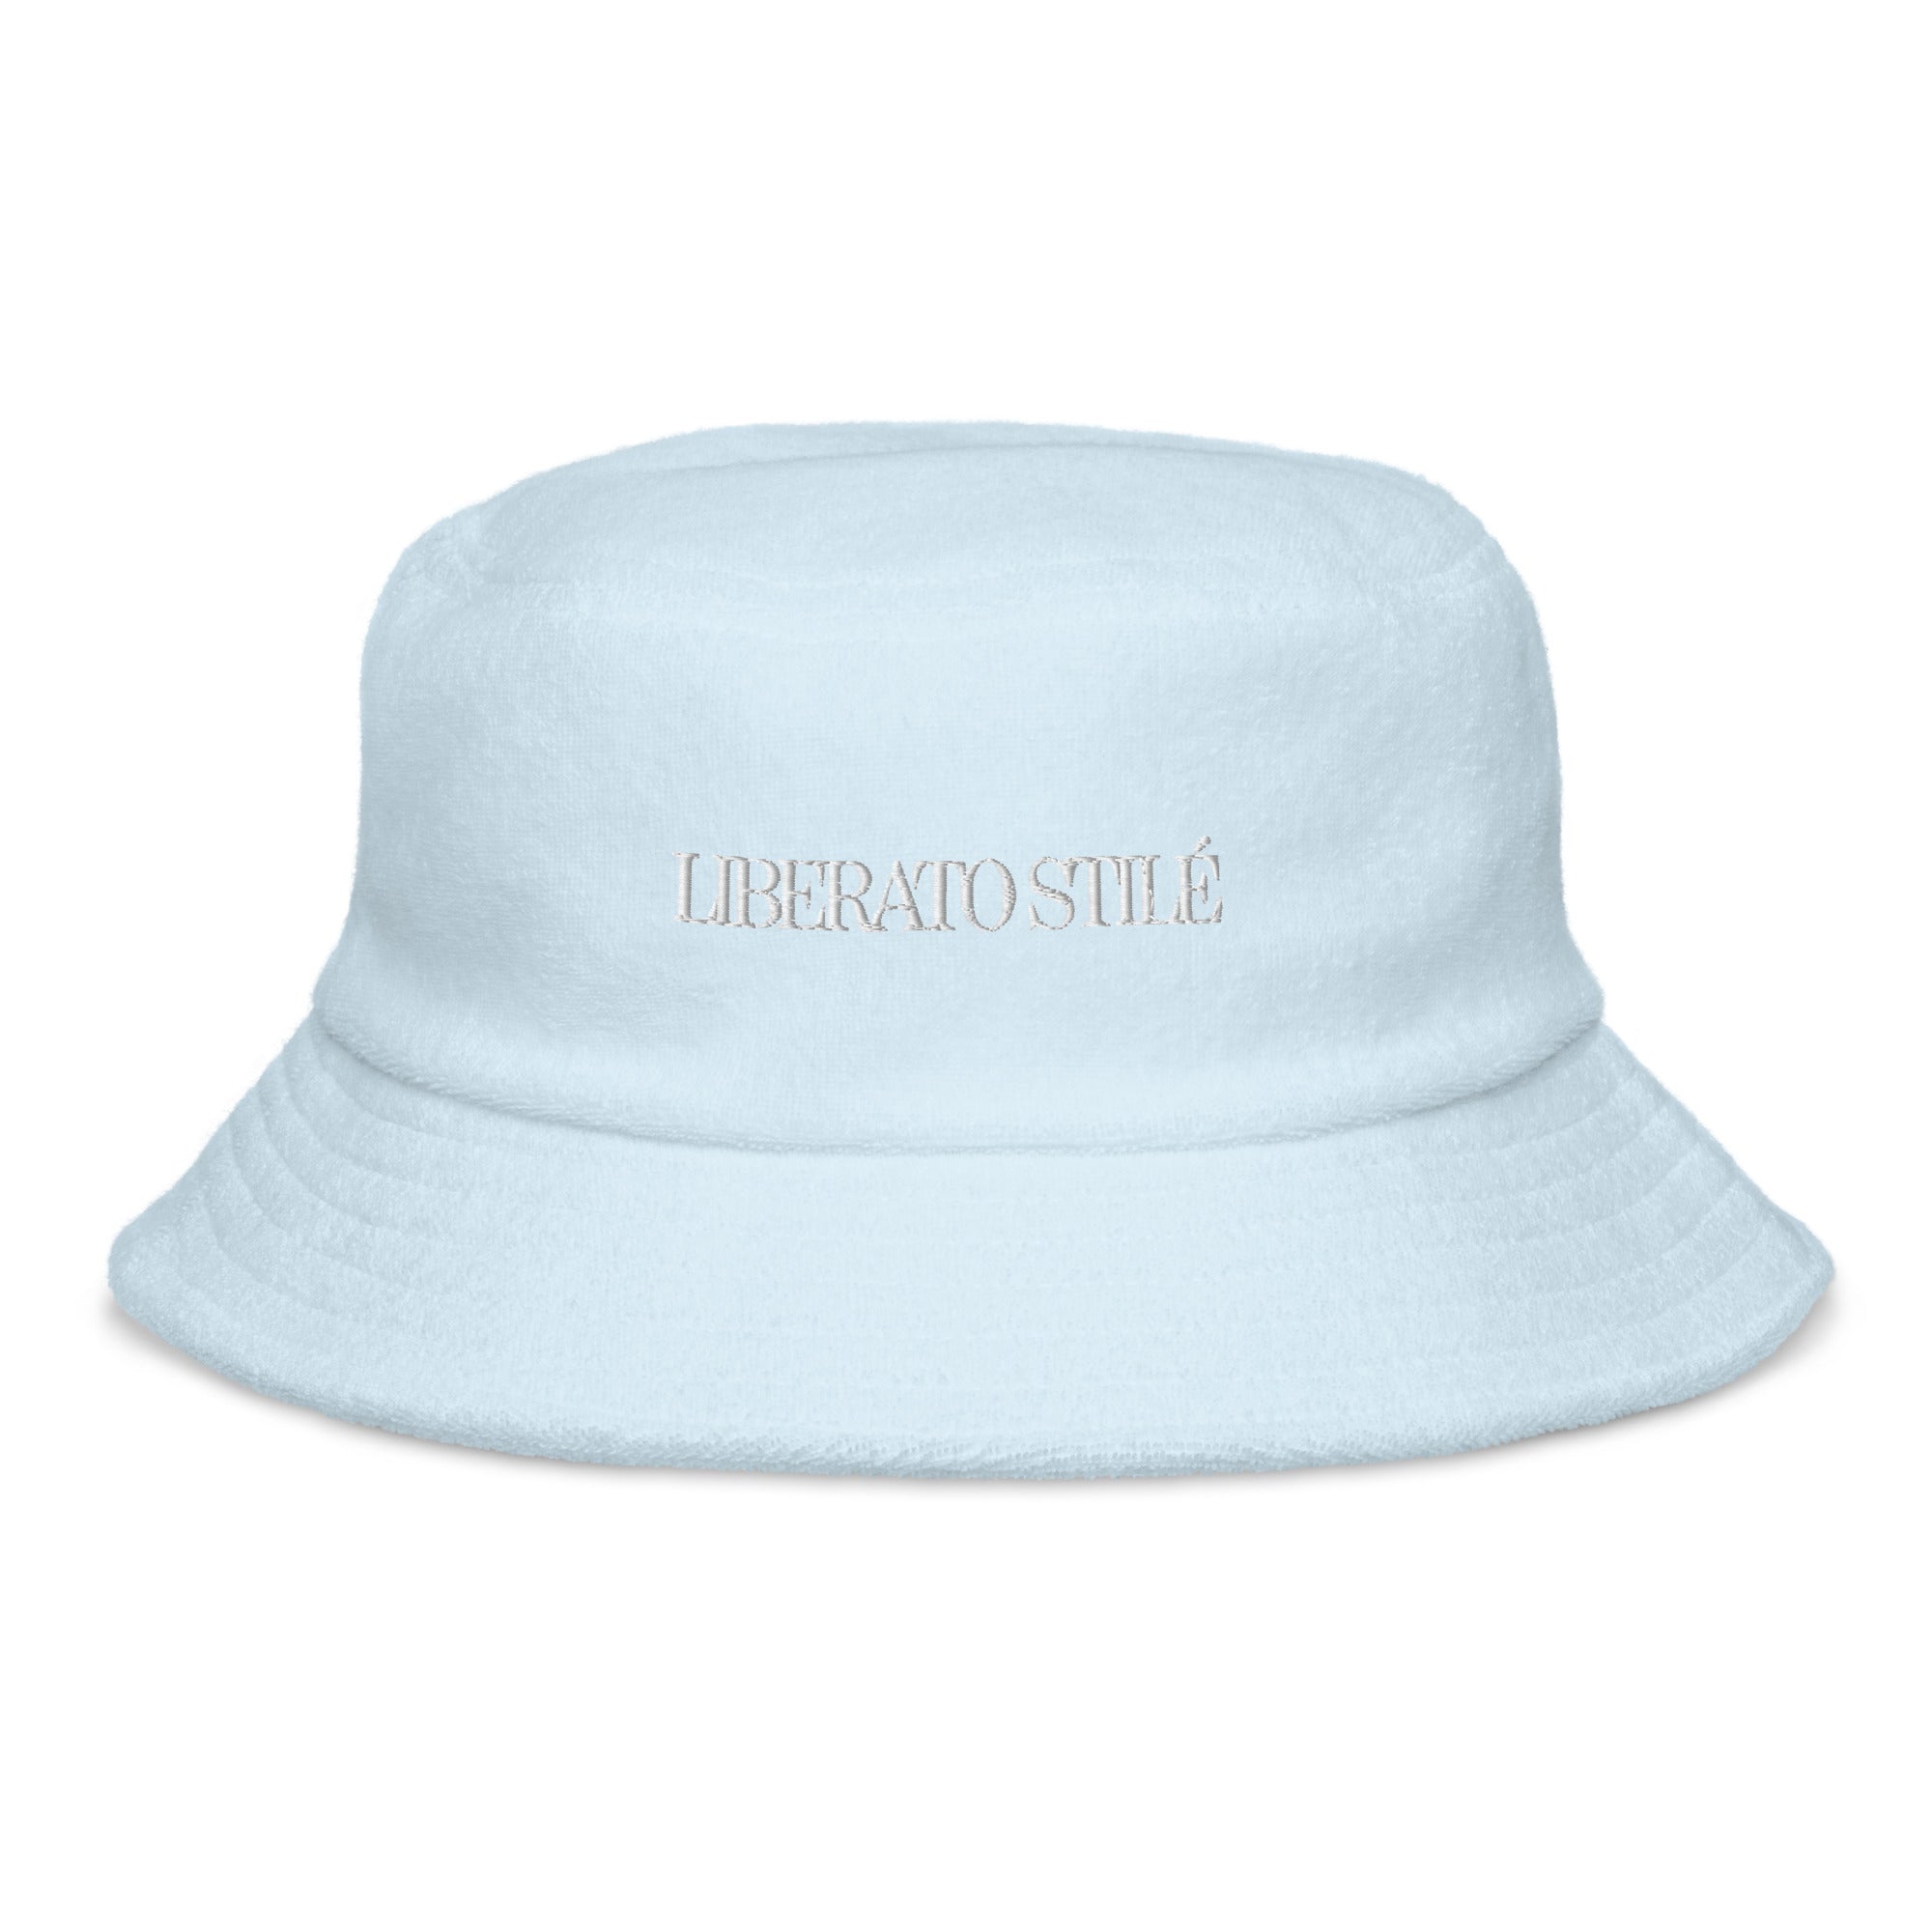 Liberato Stile Terry Cloth Bucket Hat